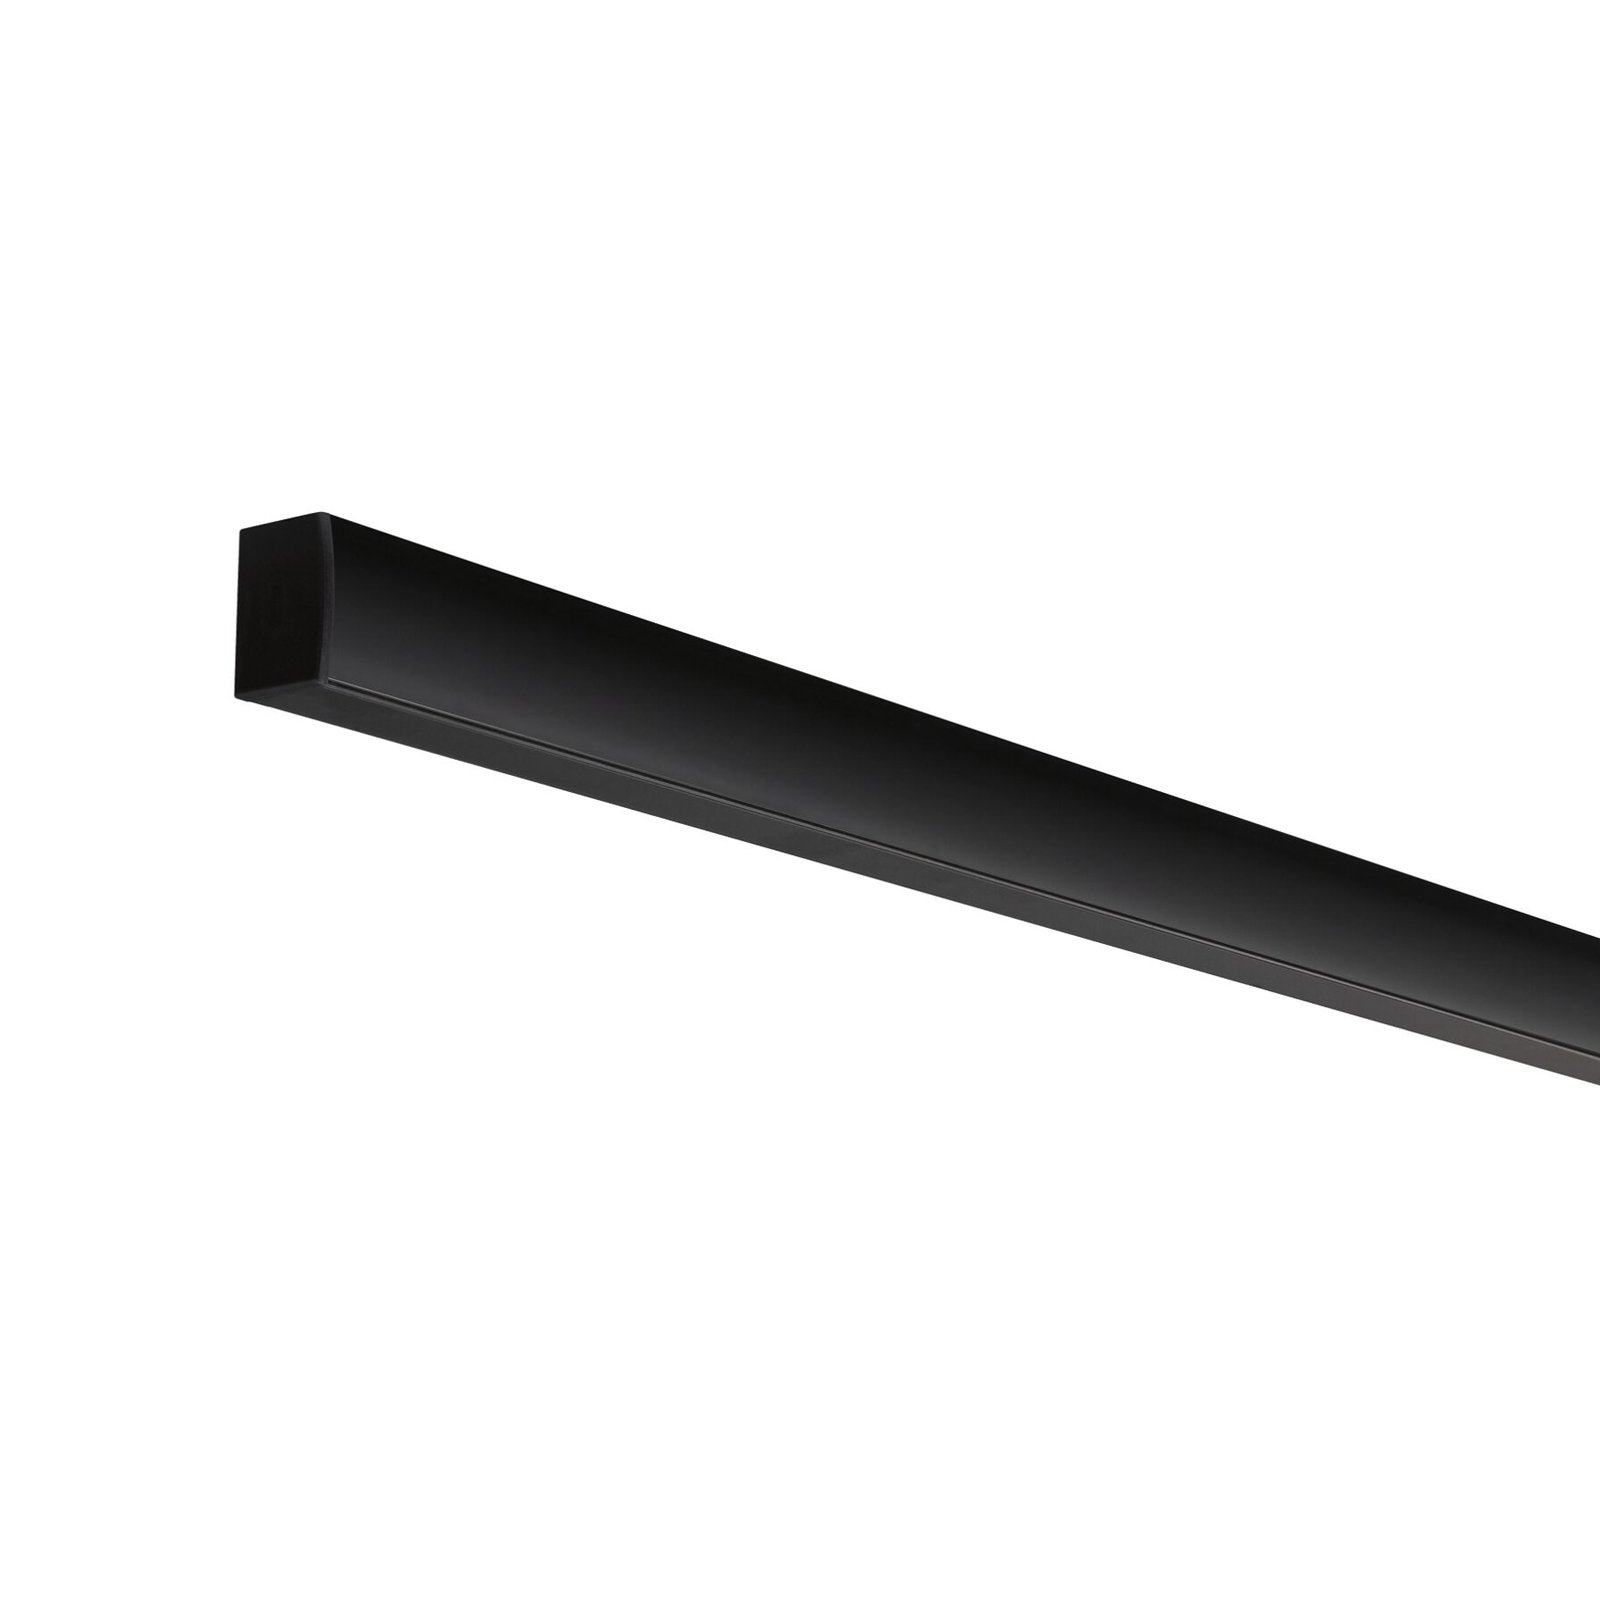 Paulmann Square profile black diffuser black 2 m